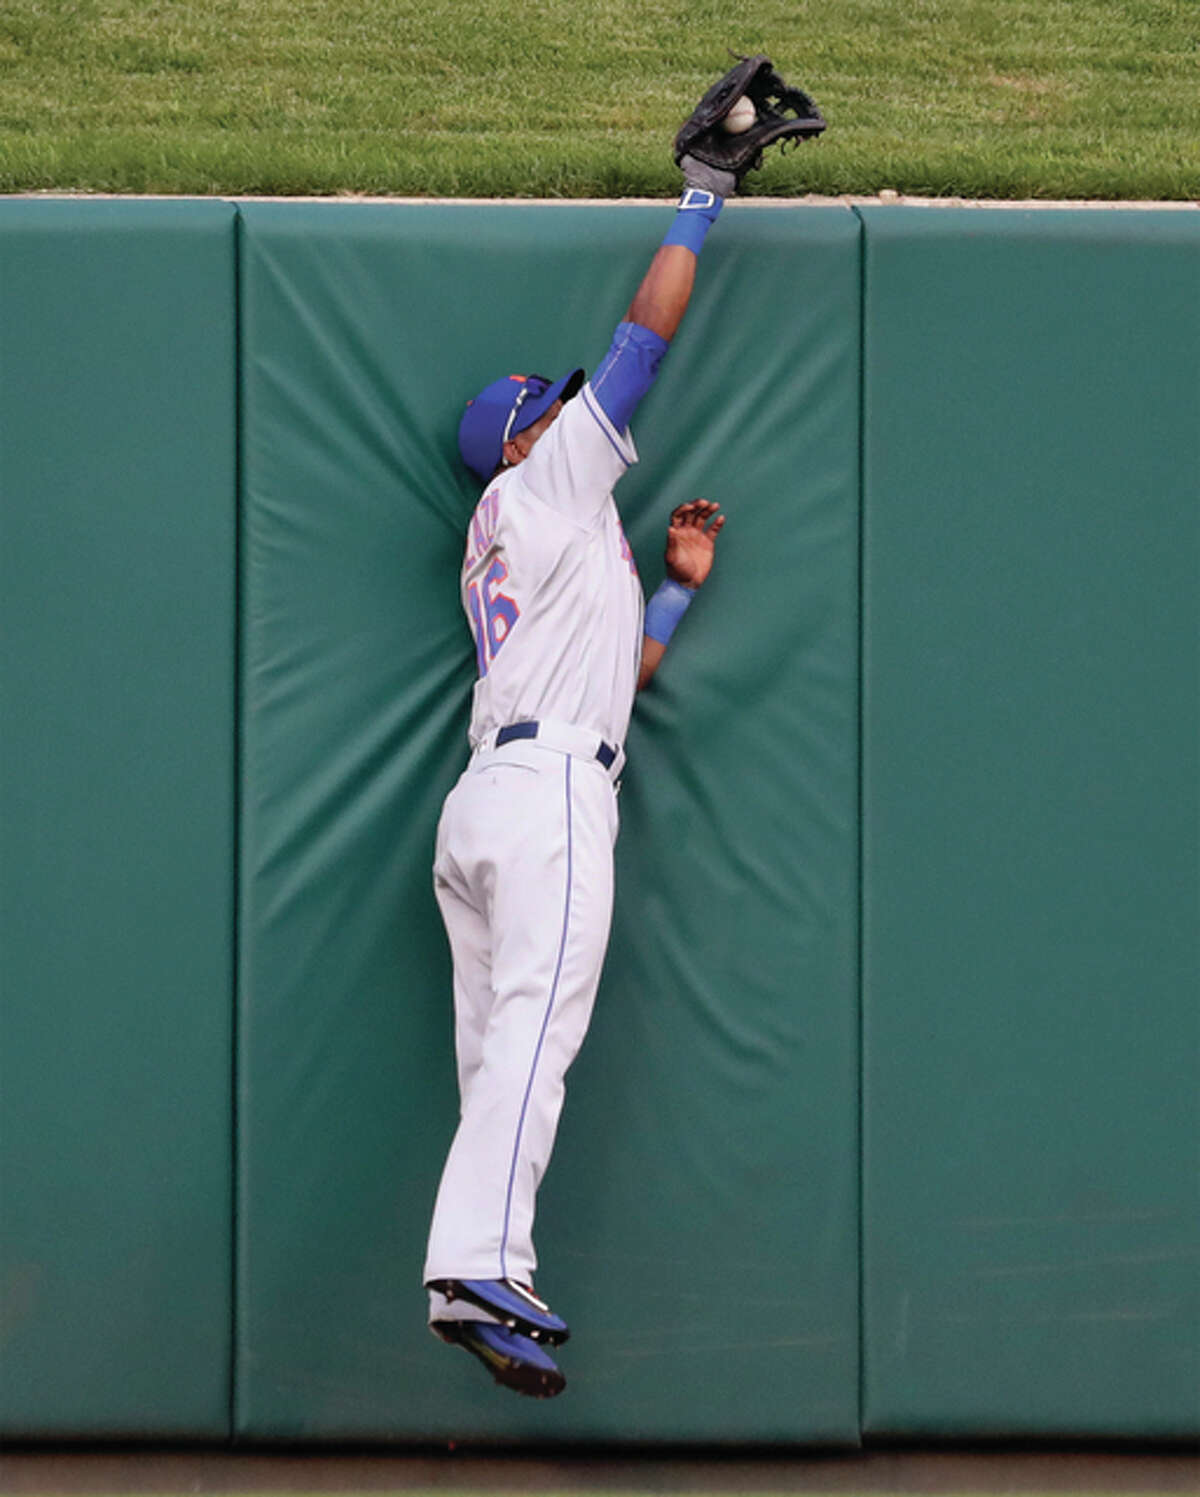 Mets center fielder Alejandro De Aza makes a leaping grab at the wall to rob the Cardinals’ Matt Carpenter in the first inning Thursday night at Busch Stadium.